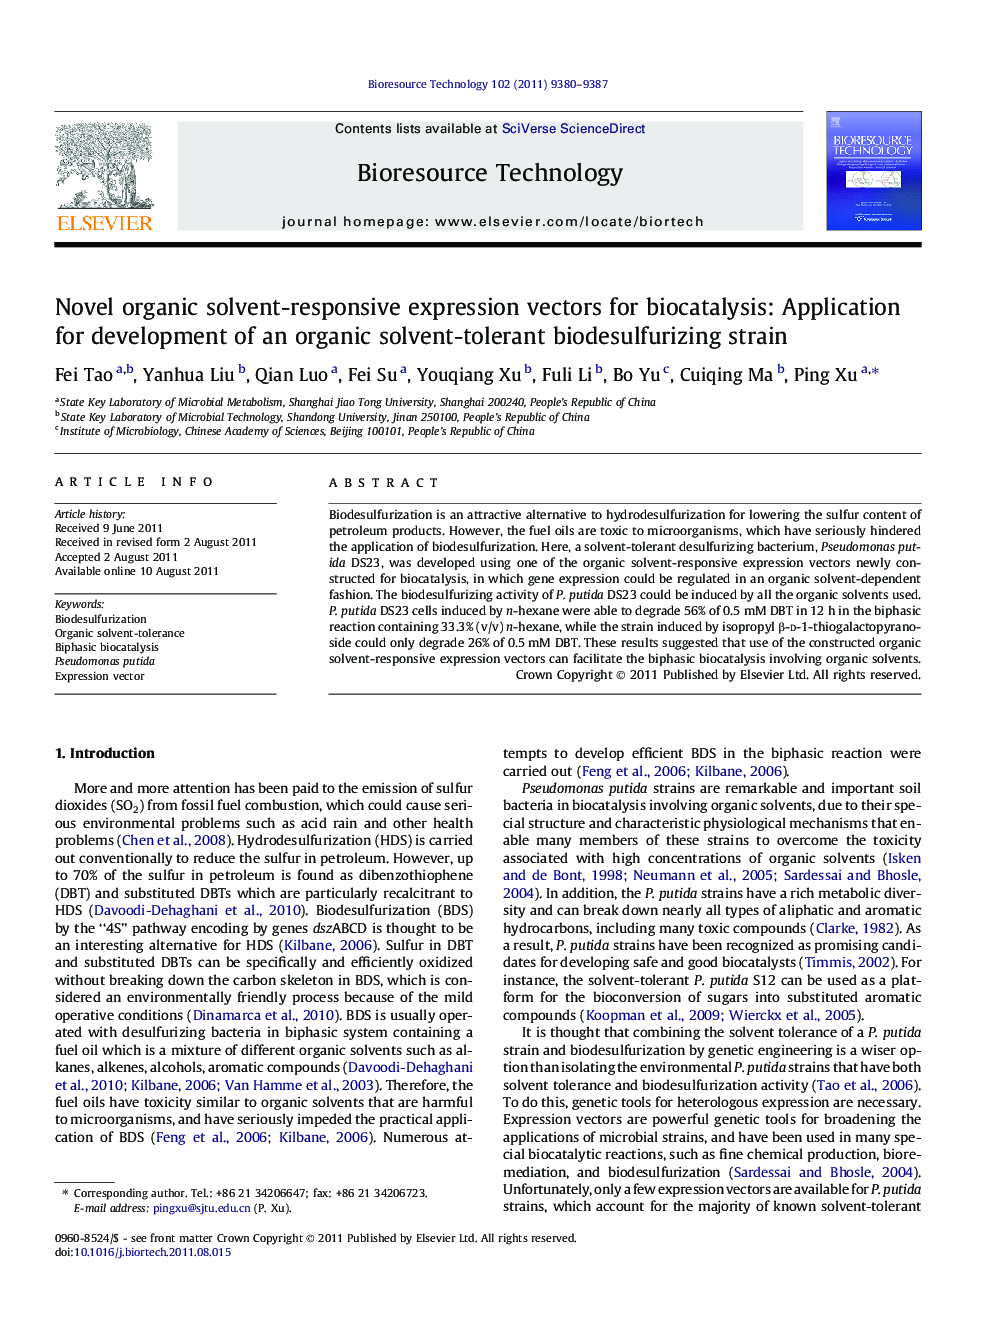 Novel organic solvent-responsive expression vectors for biocatalysis: Application for development of an organic solvent-tolerant biodesulfurizing strain